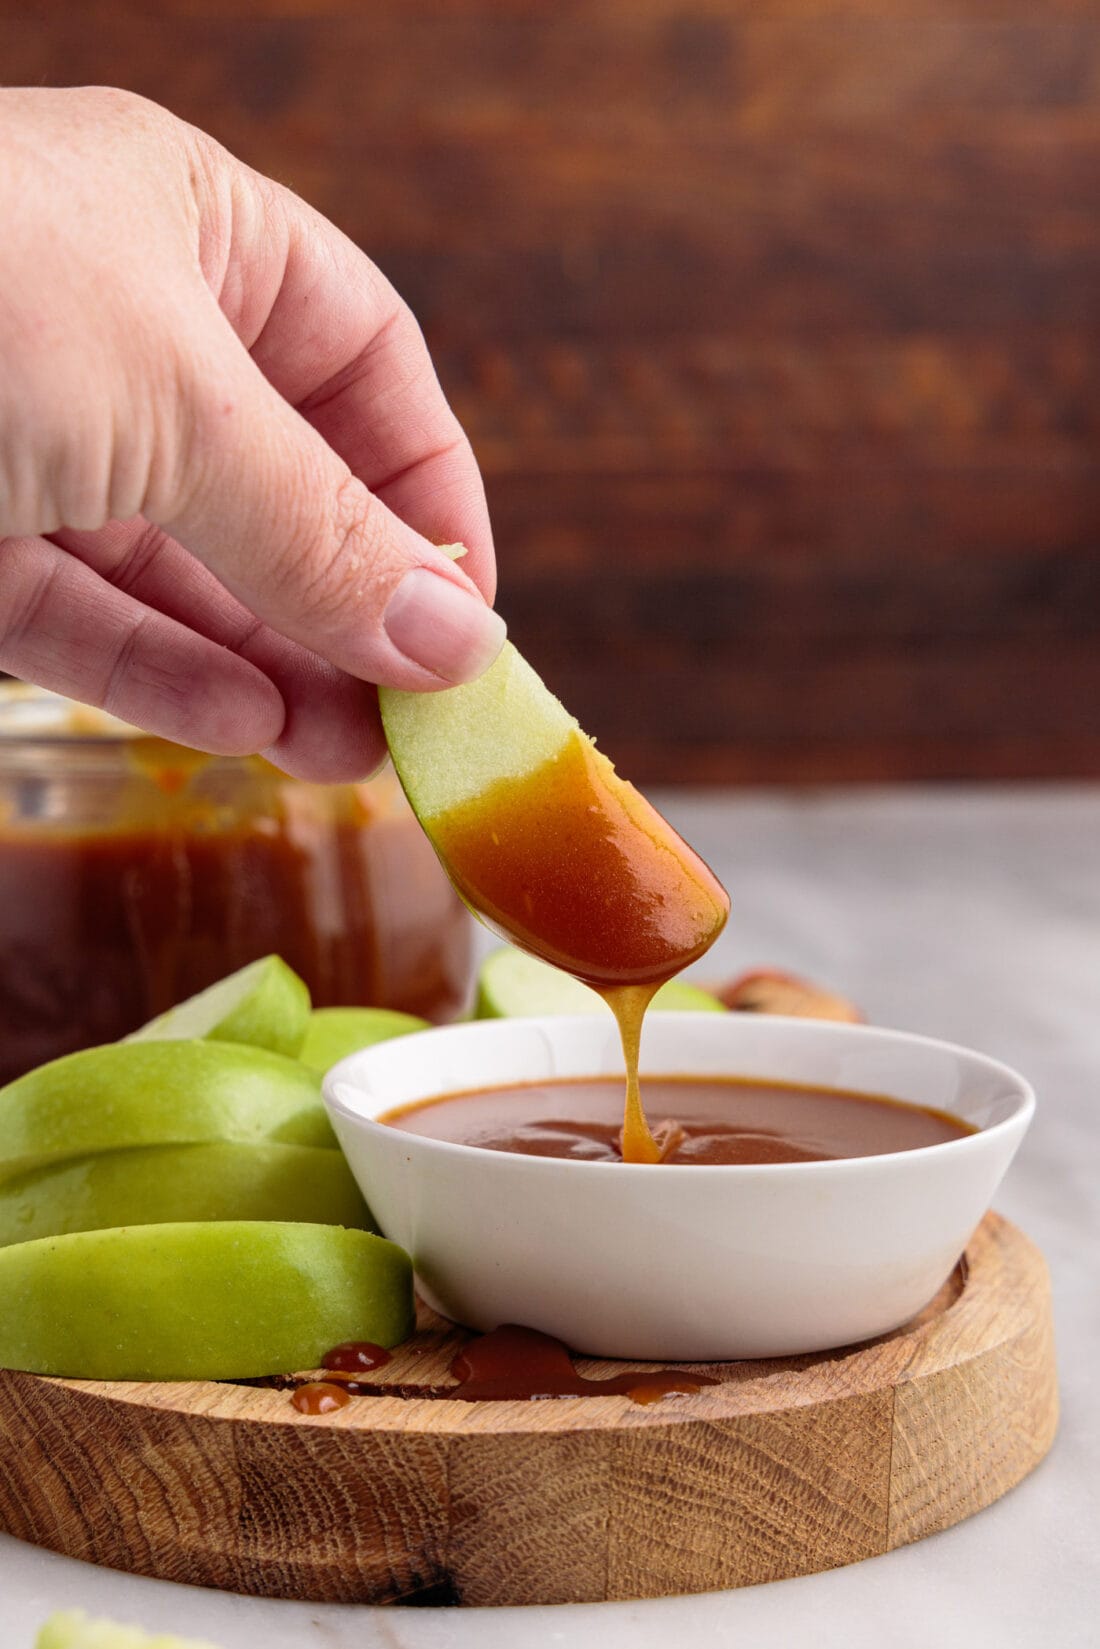 dipping apple slice into Caramel Sauce